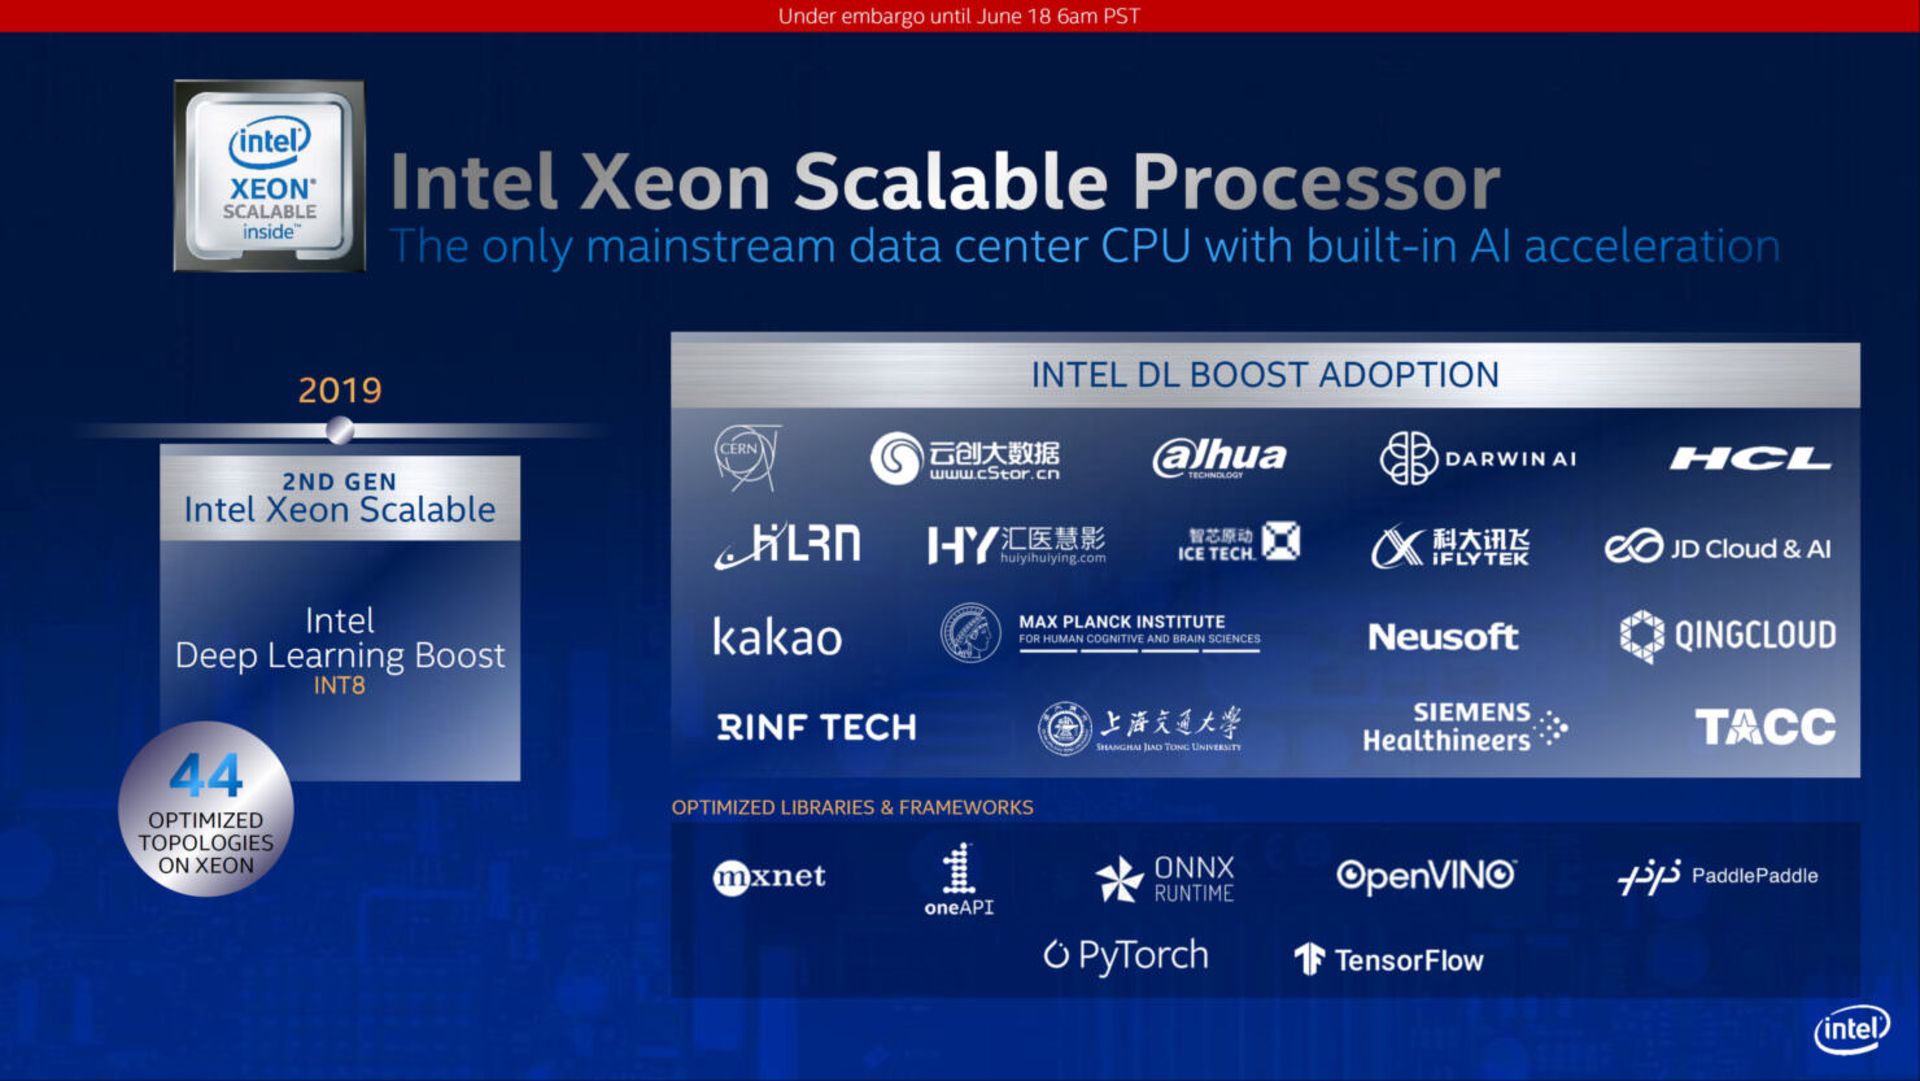 پردازنده های نسل 3 اینتل زئون کوپر لیک SP / intel scalable 3rd gen xeon cooper lake CPU